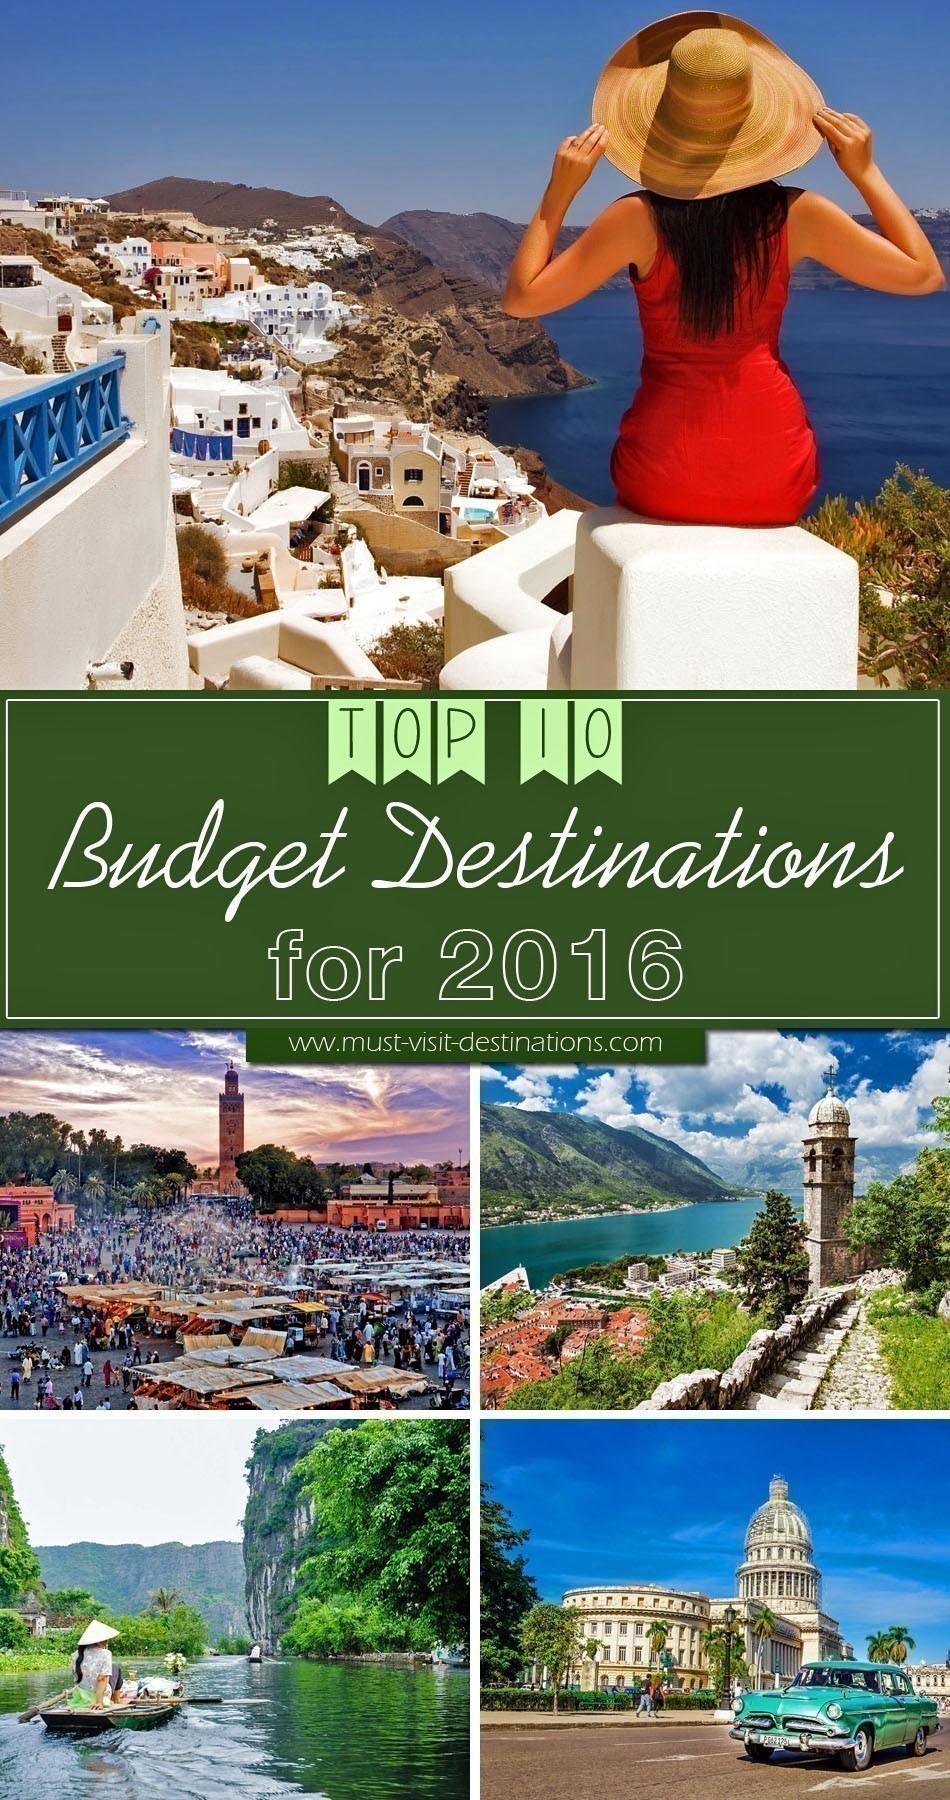 TOP 10 Budget Destinations for 2016 #budgettravel #travel